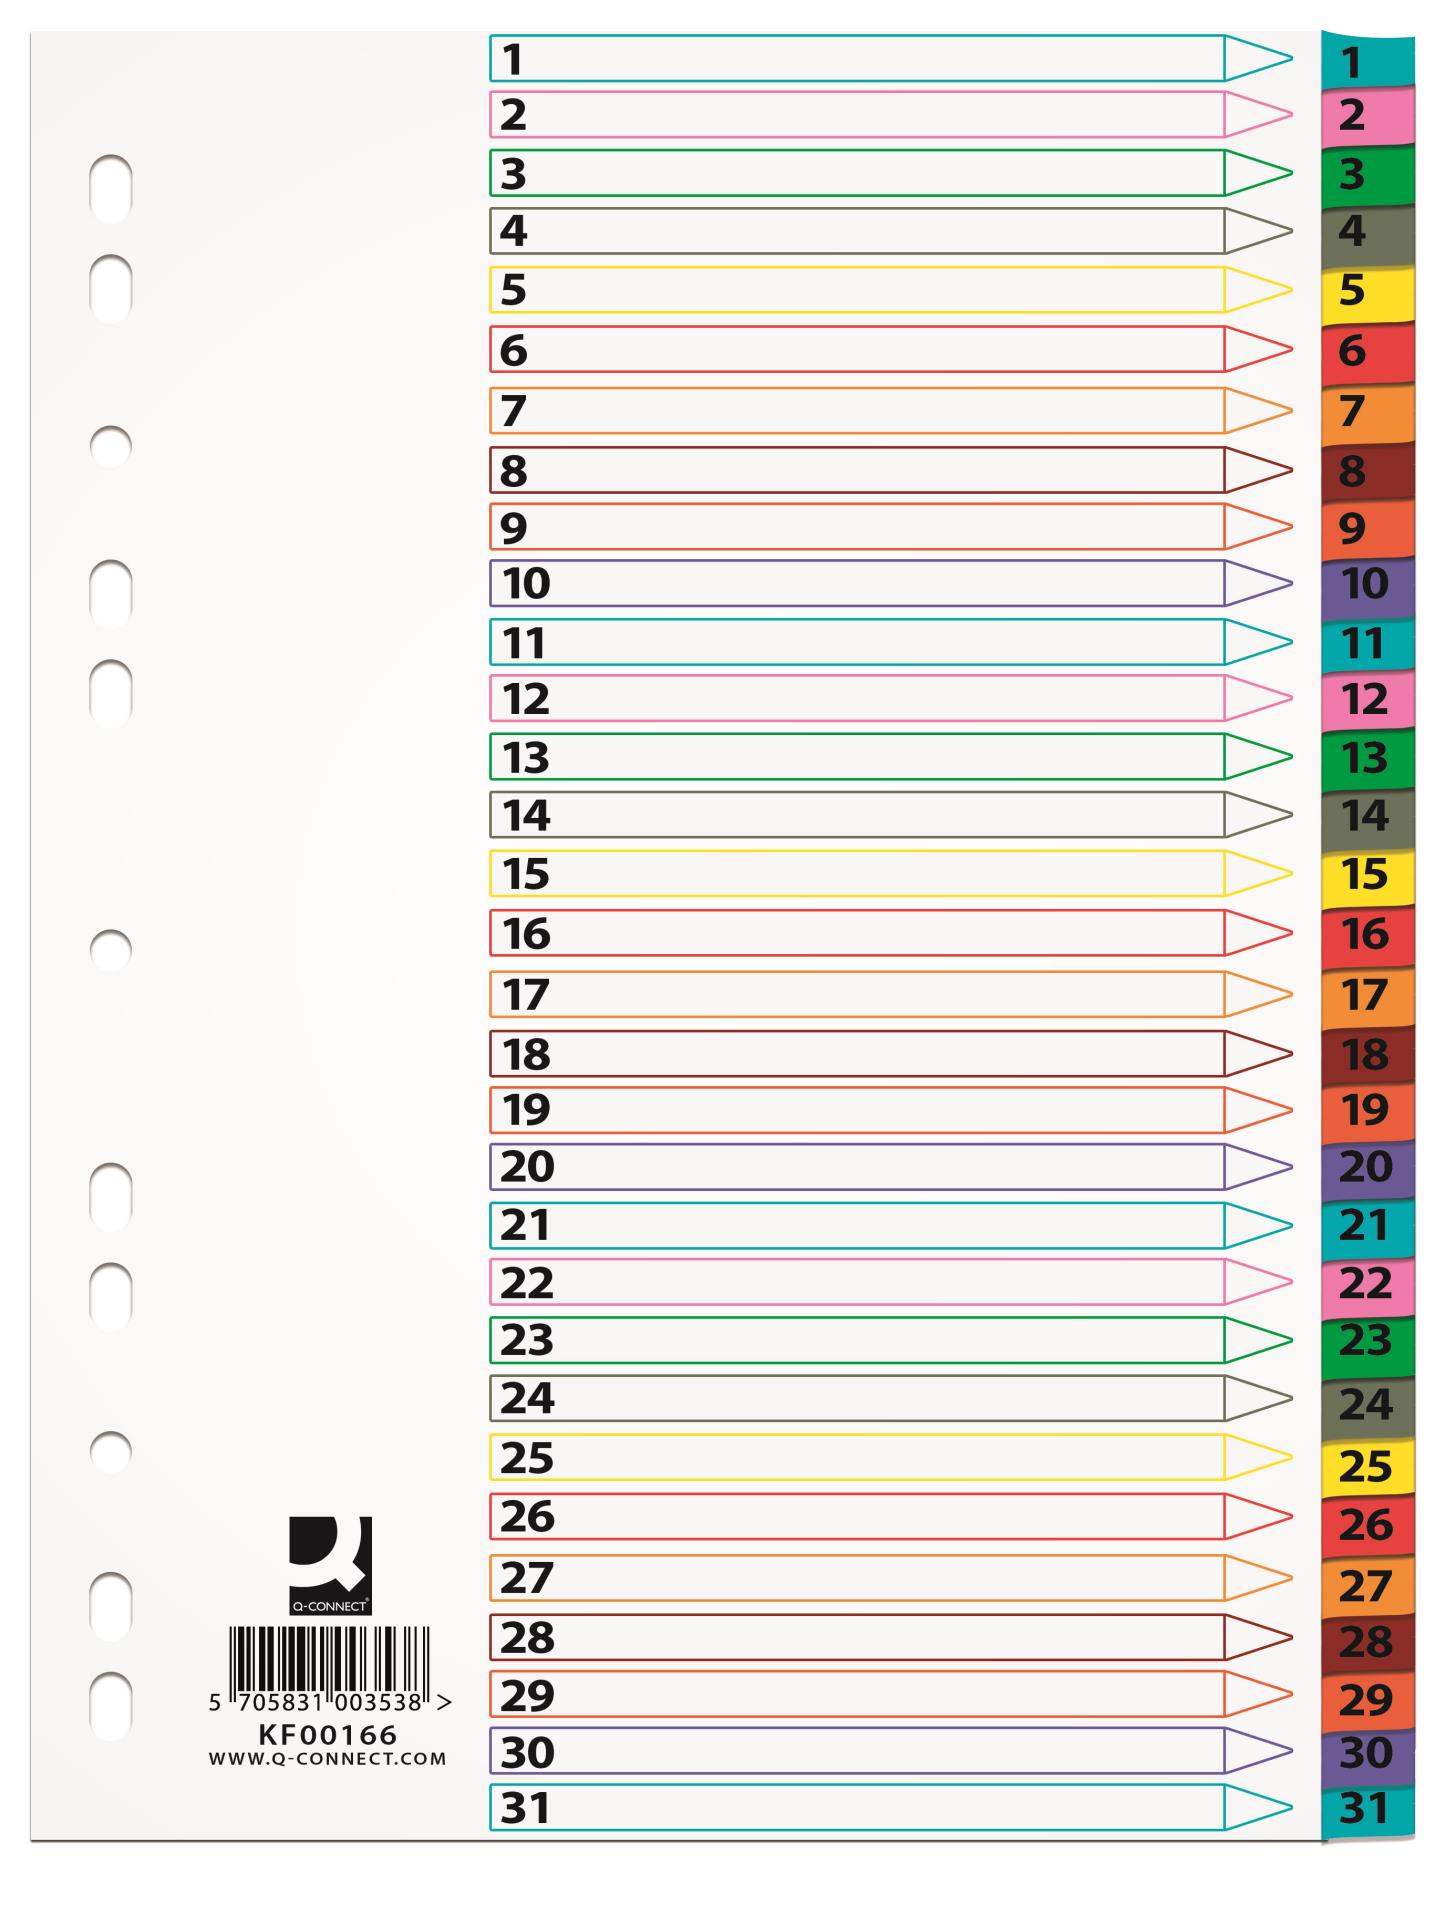 Papírový rozlišovač Q-Connect - A4, bílý s barevným okrajem, 1-31